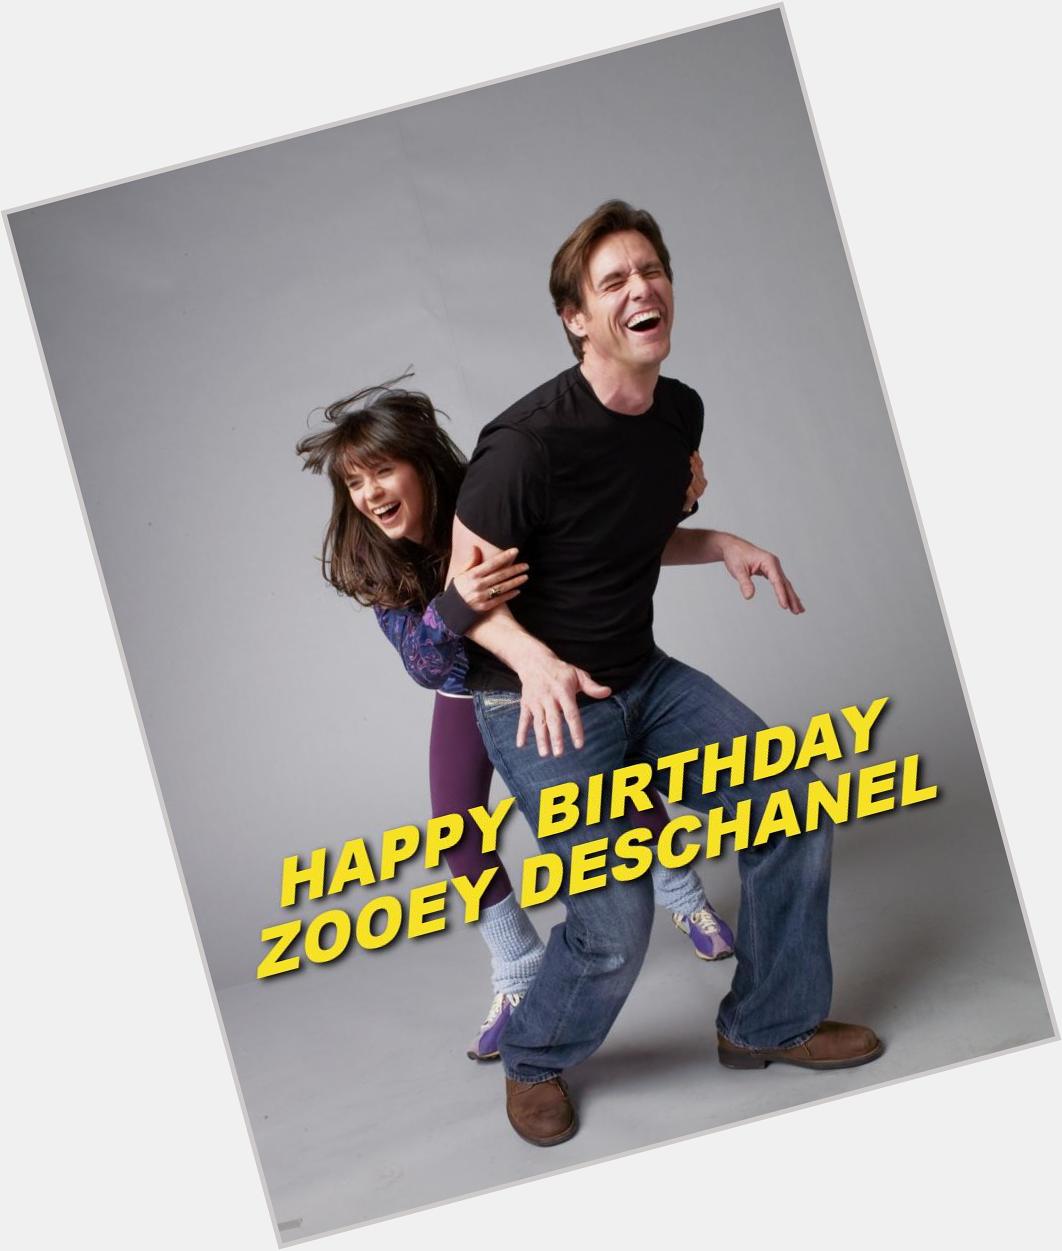 Happy Birthday Zooey Deschanel!  